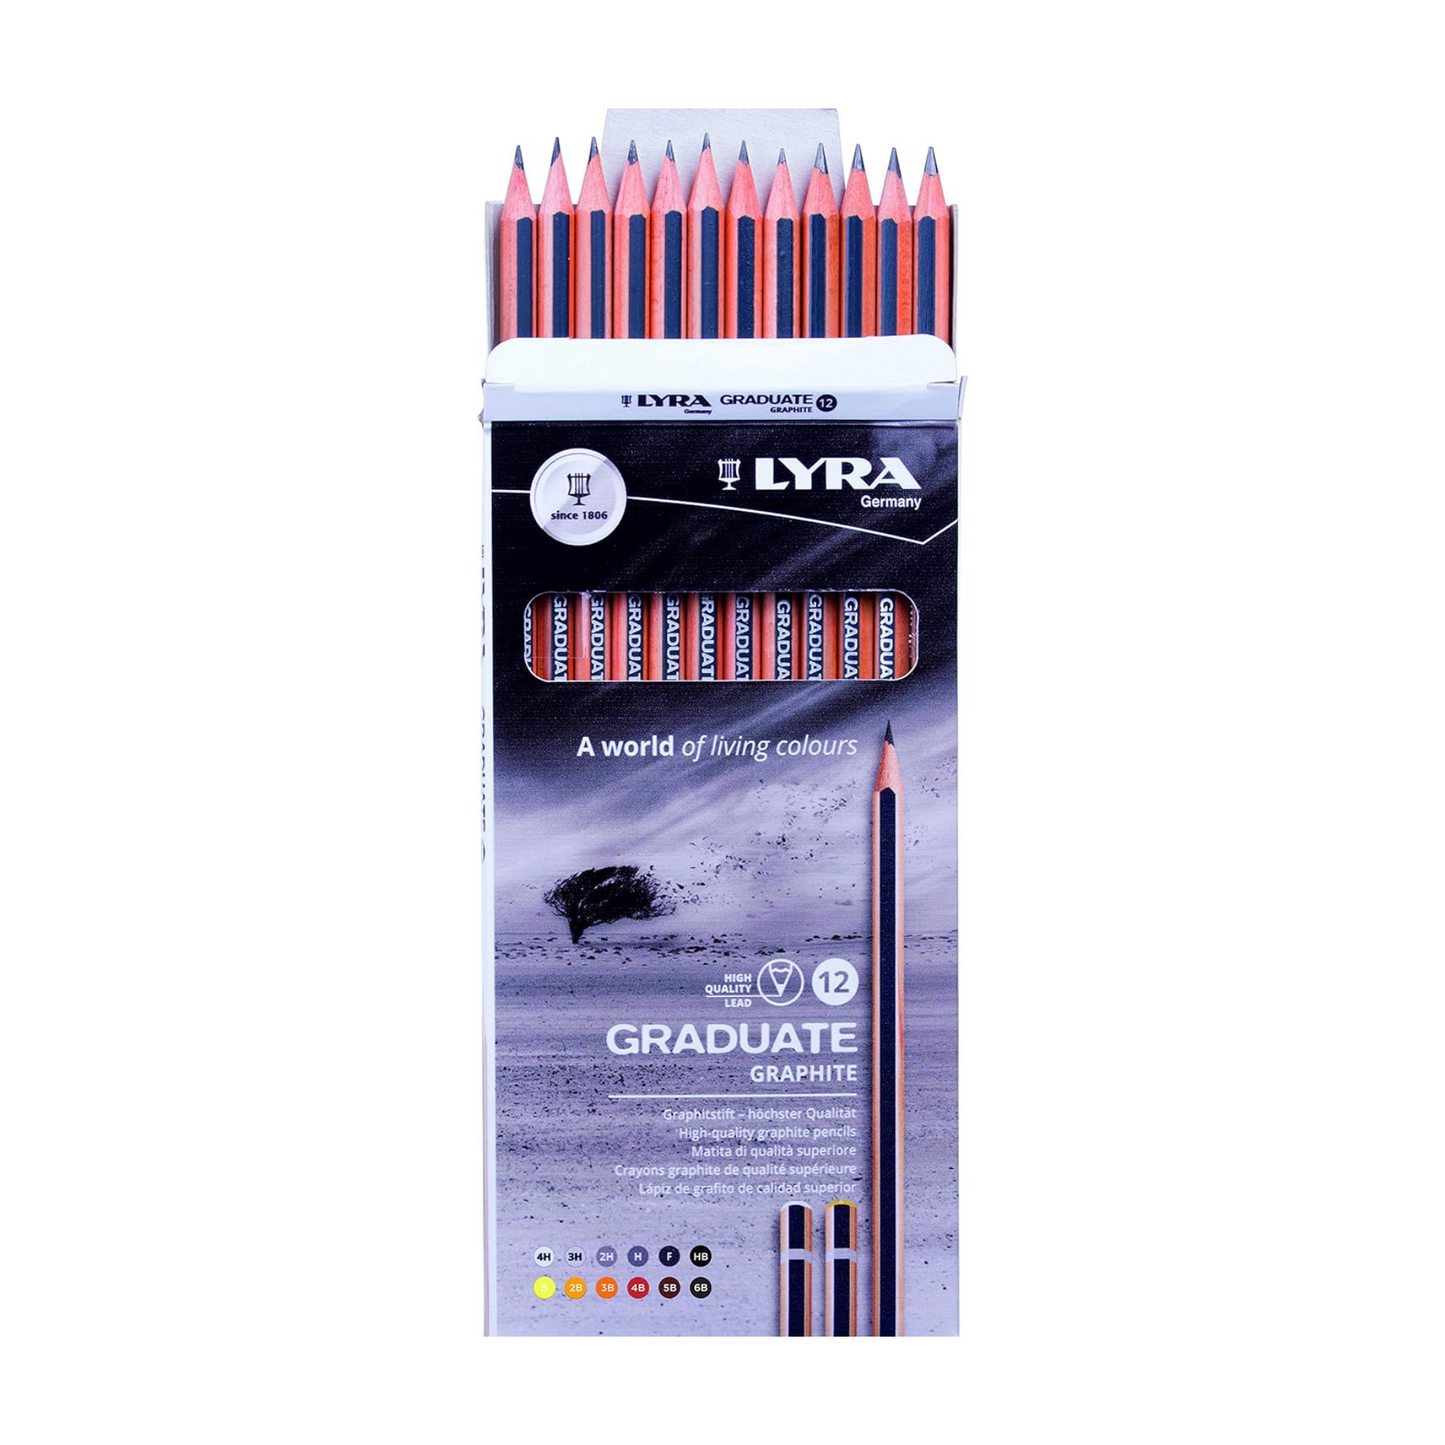 Lyra Graduate Graphite Pencils (set of 12 in a box)